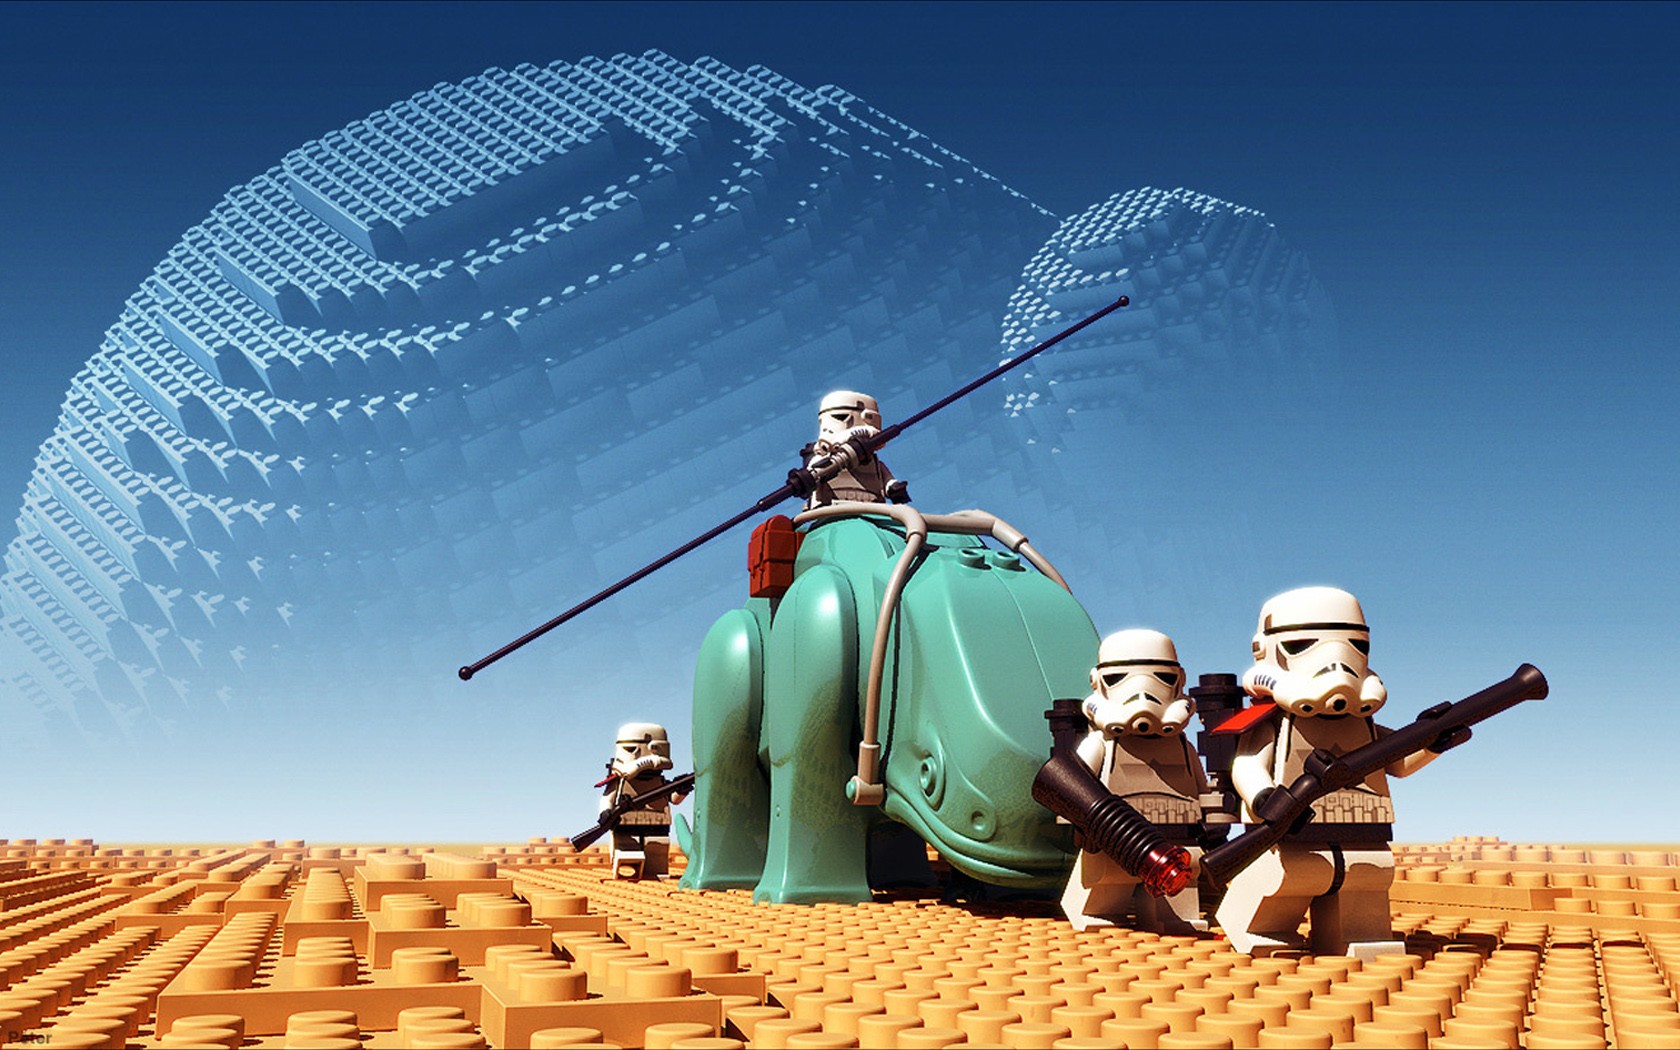 Lego Star Wars The Force Awakens Video Games Lego Star Wars Toys Wallpaper Resolution 1680x1050 Id Wallha Com